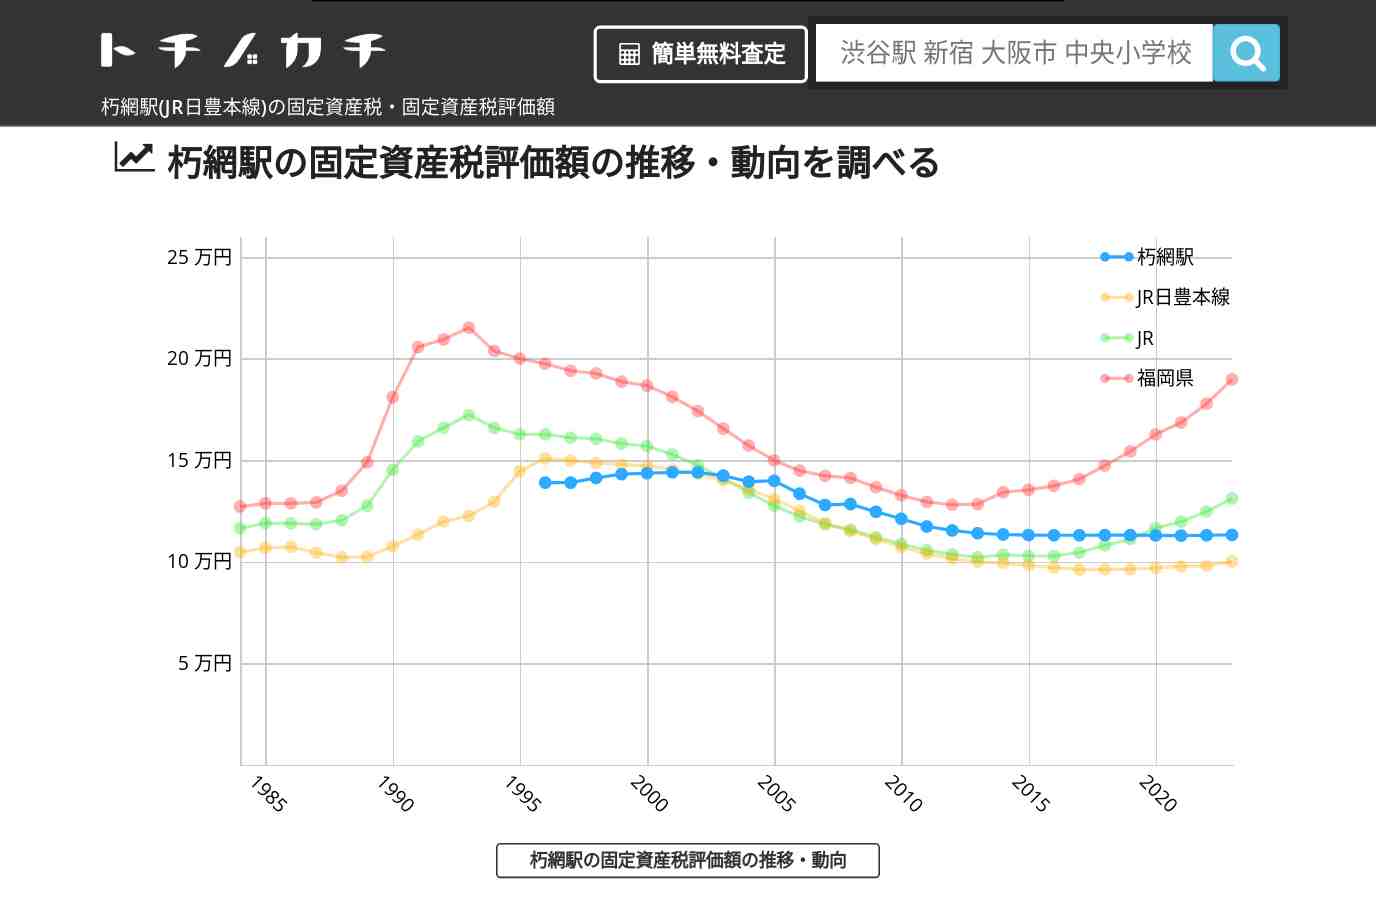 朽網駅(JR日豊本線)の固定資産税・固定資産税評価額 | トチノカチ